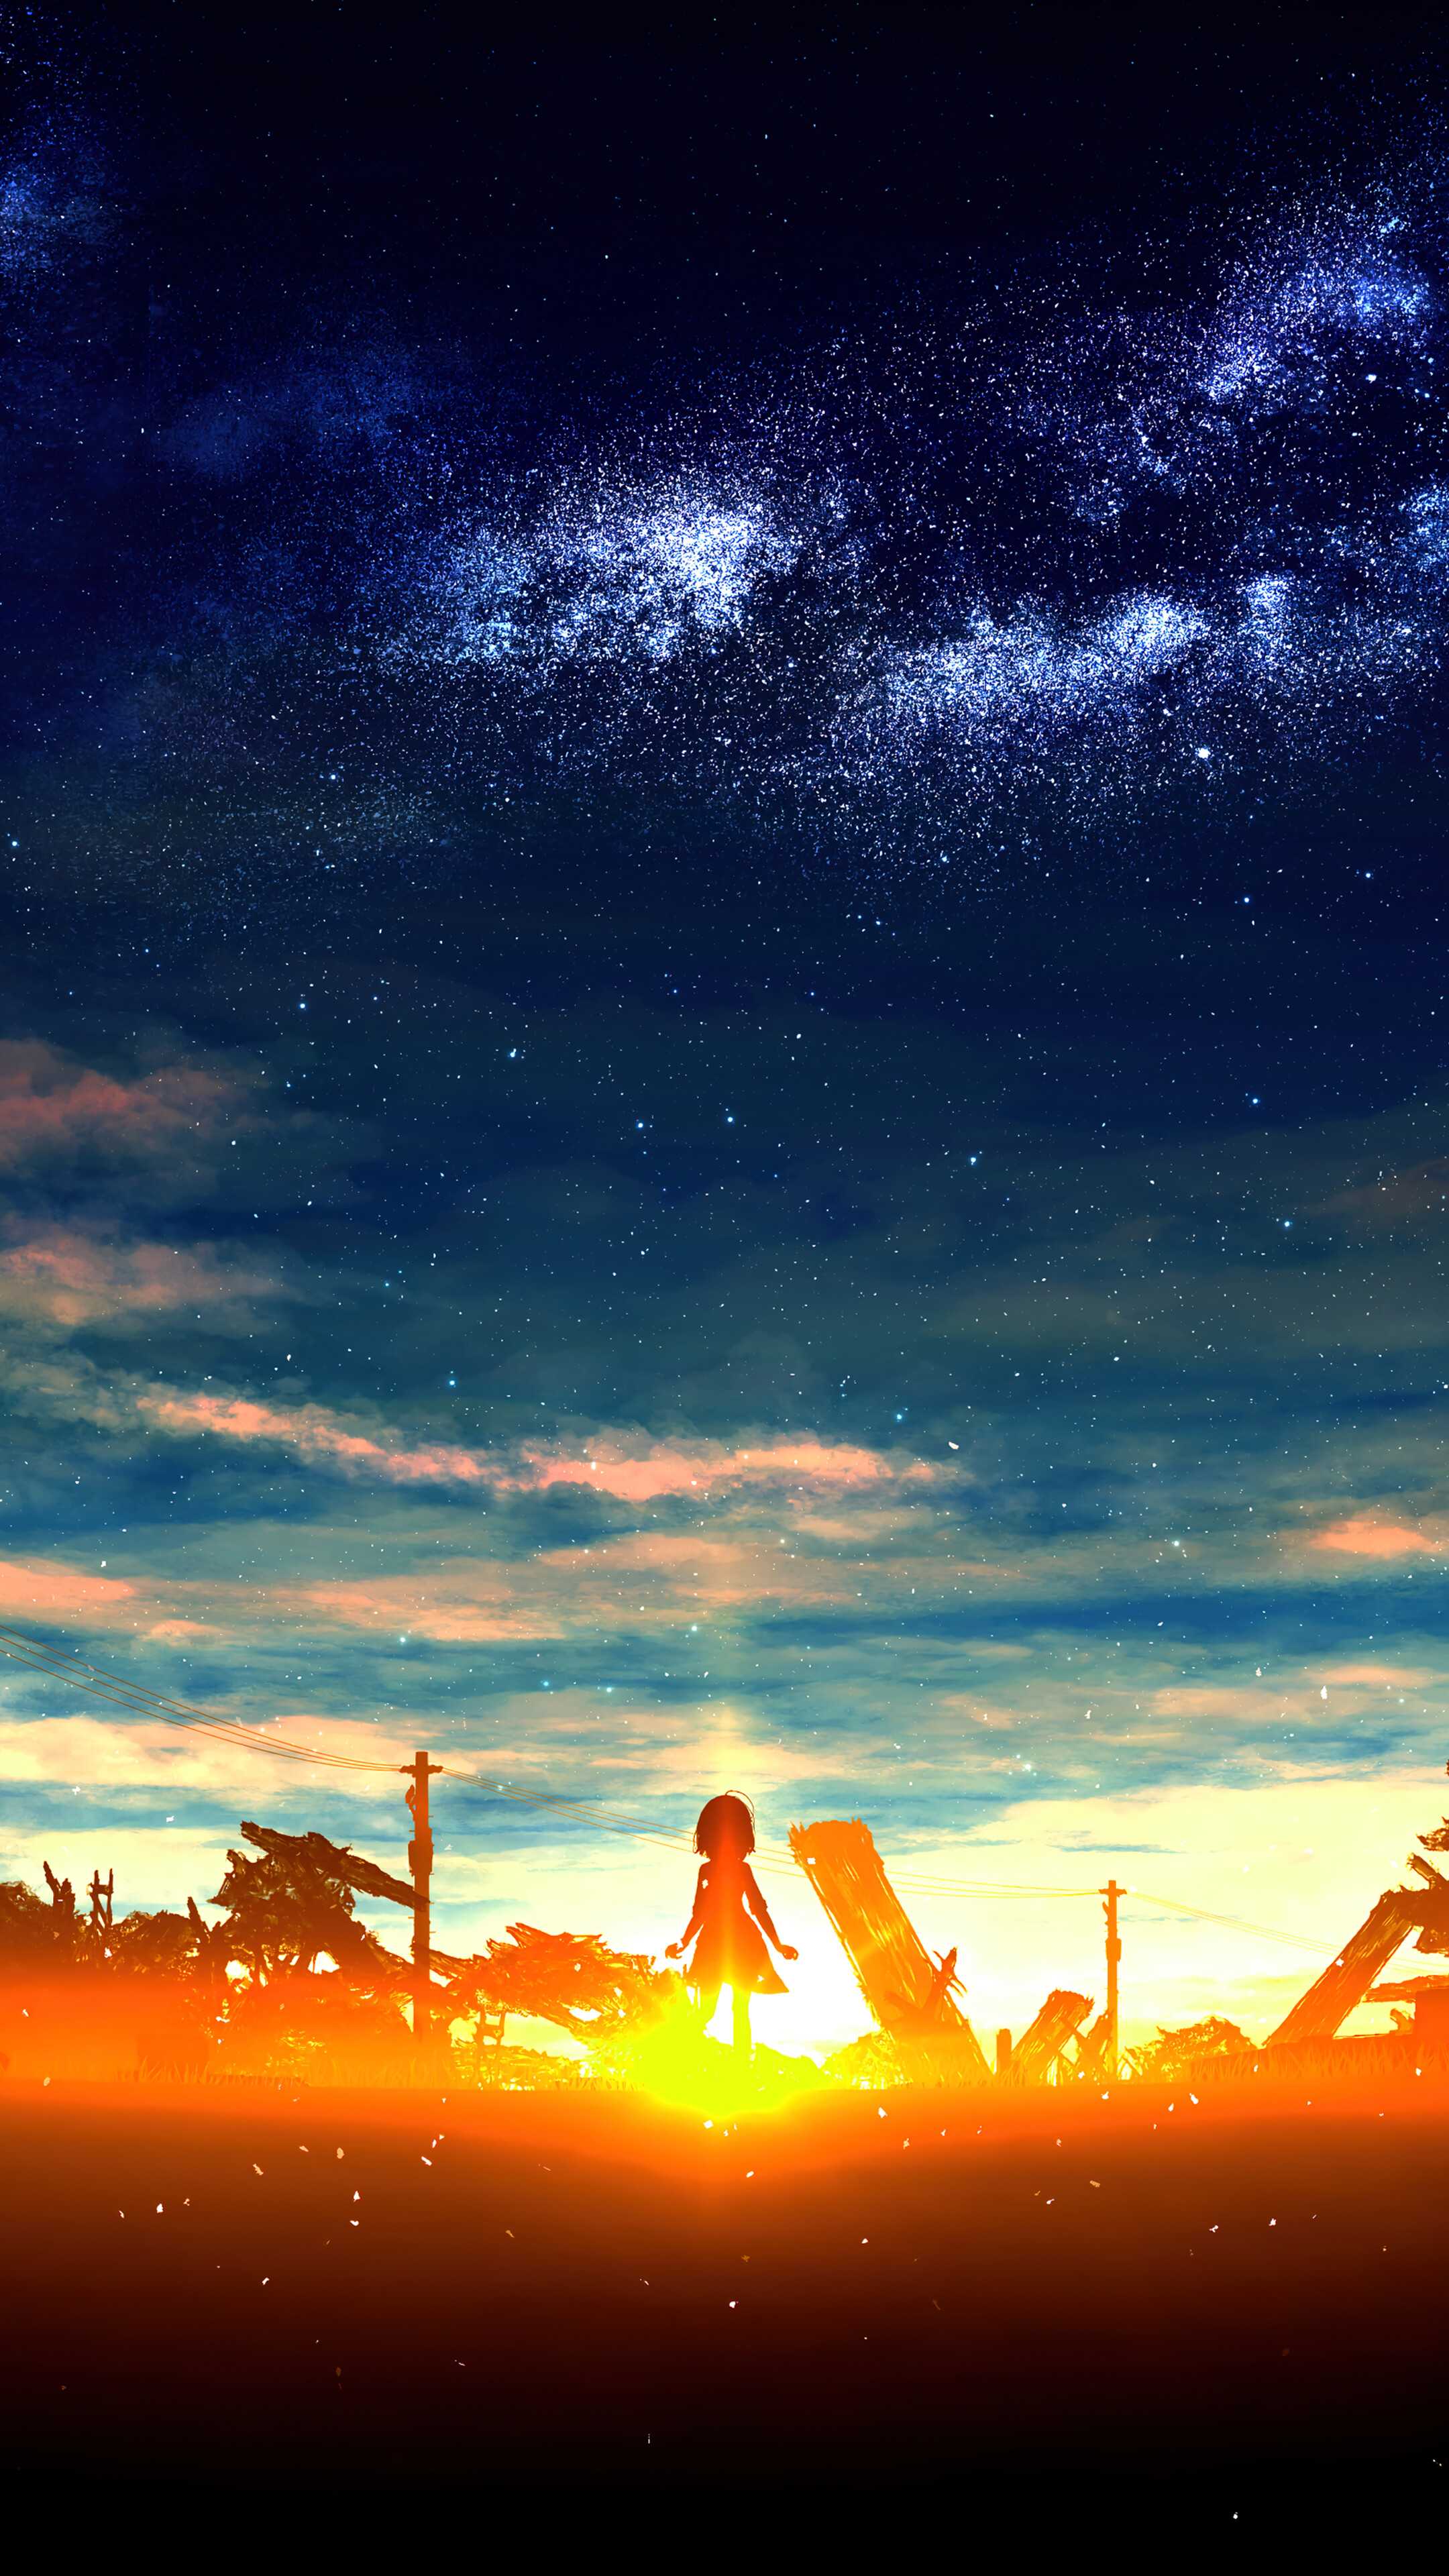 Sunset Scenery Anime Art 4k Phone iPhone Wallpaper 604a